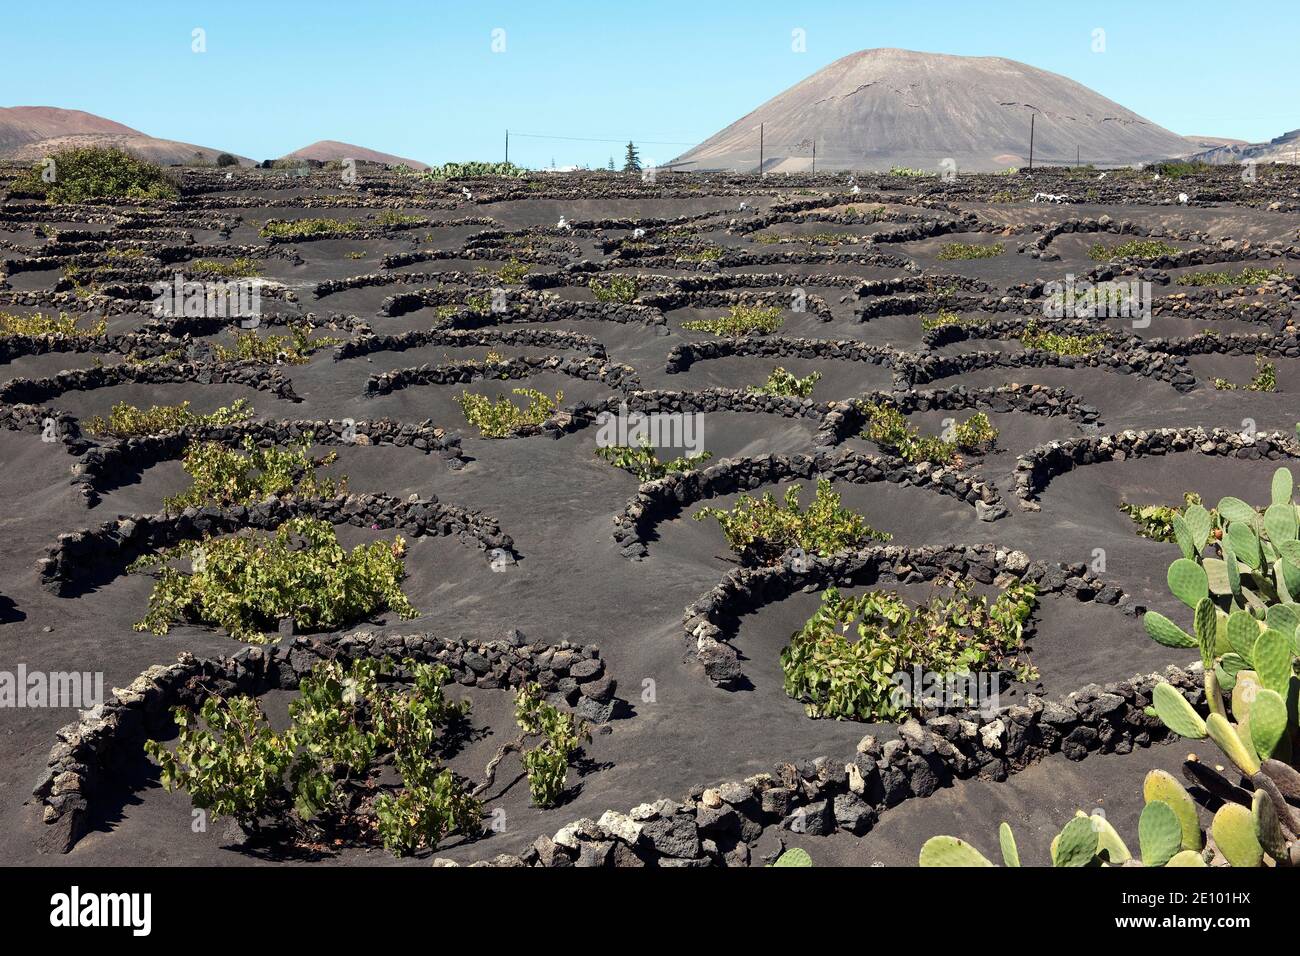 Viñedo típico en suelo de lava negra, Lanzarote, Islas Canarias, España, Europa Foto de stock